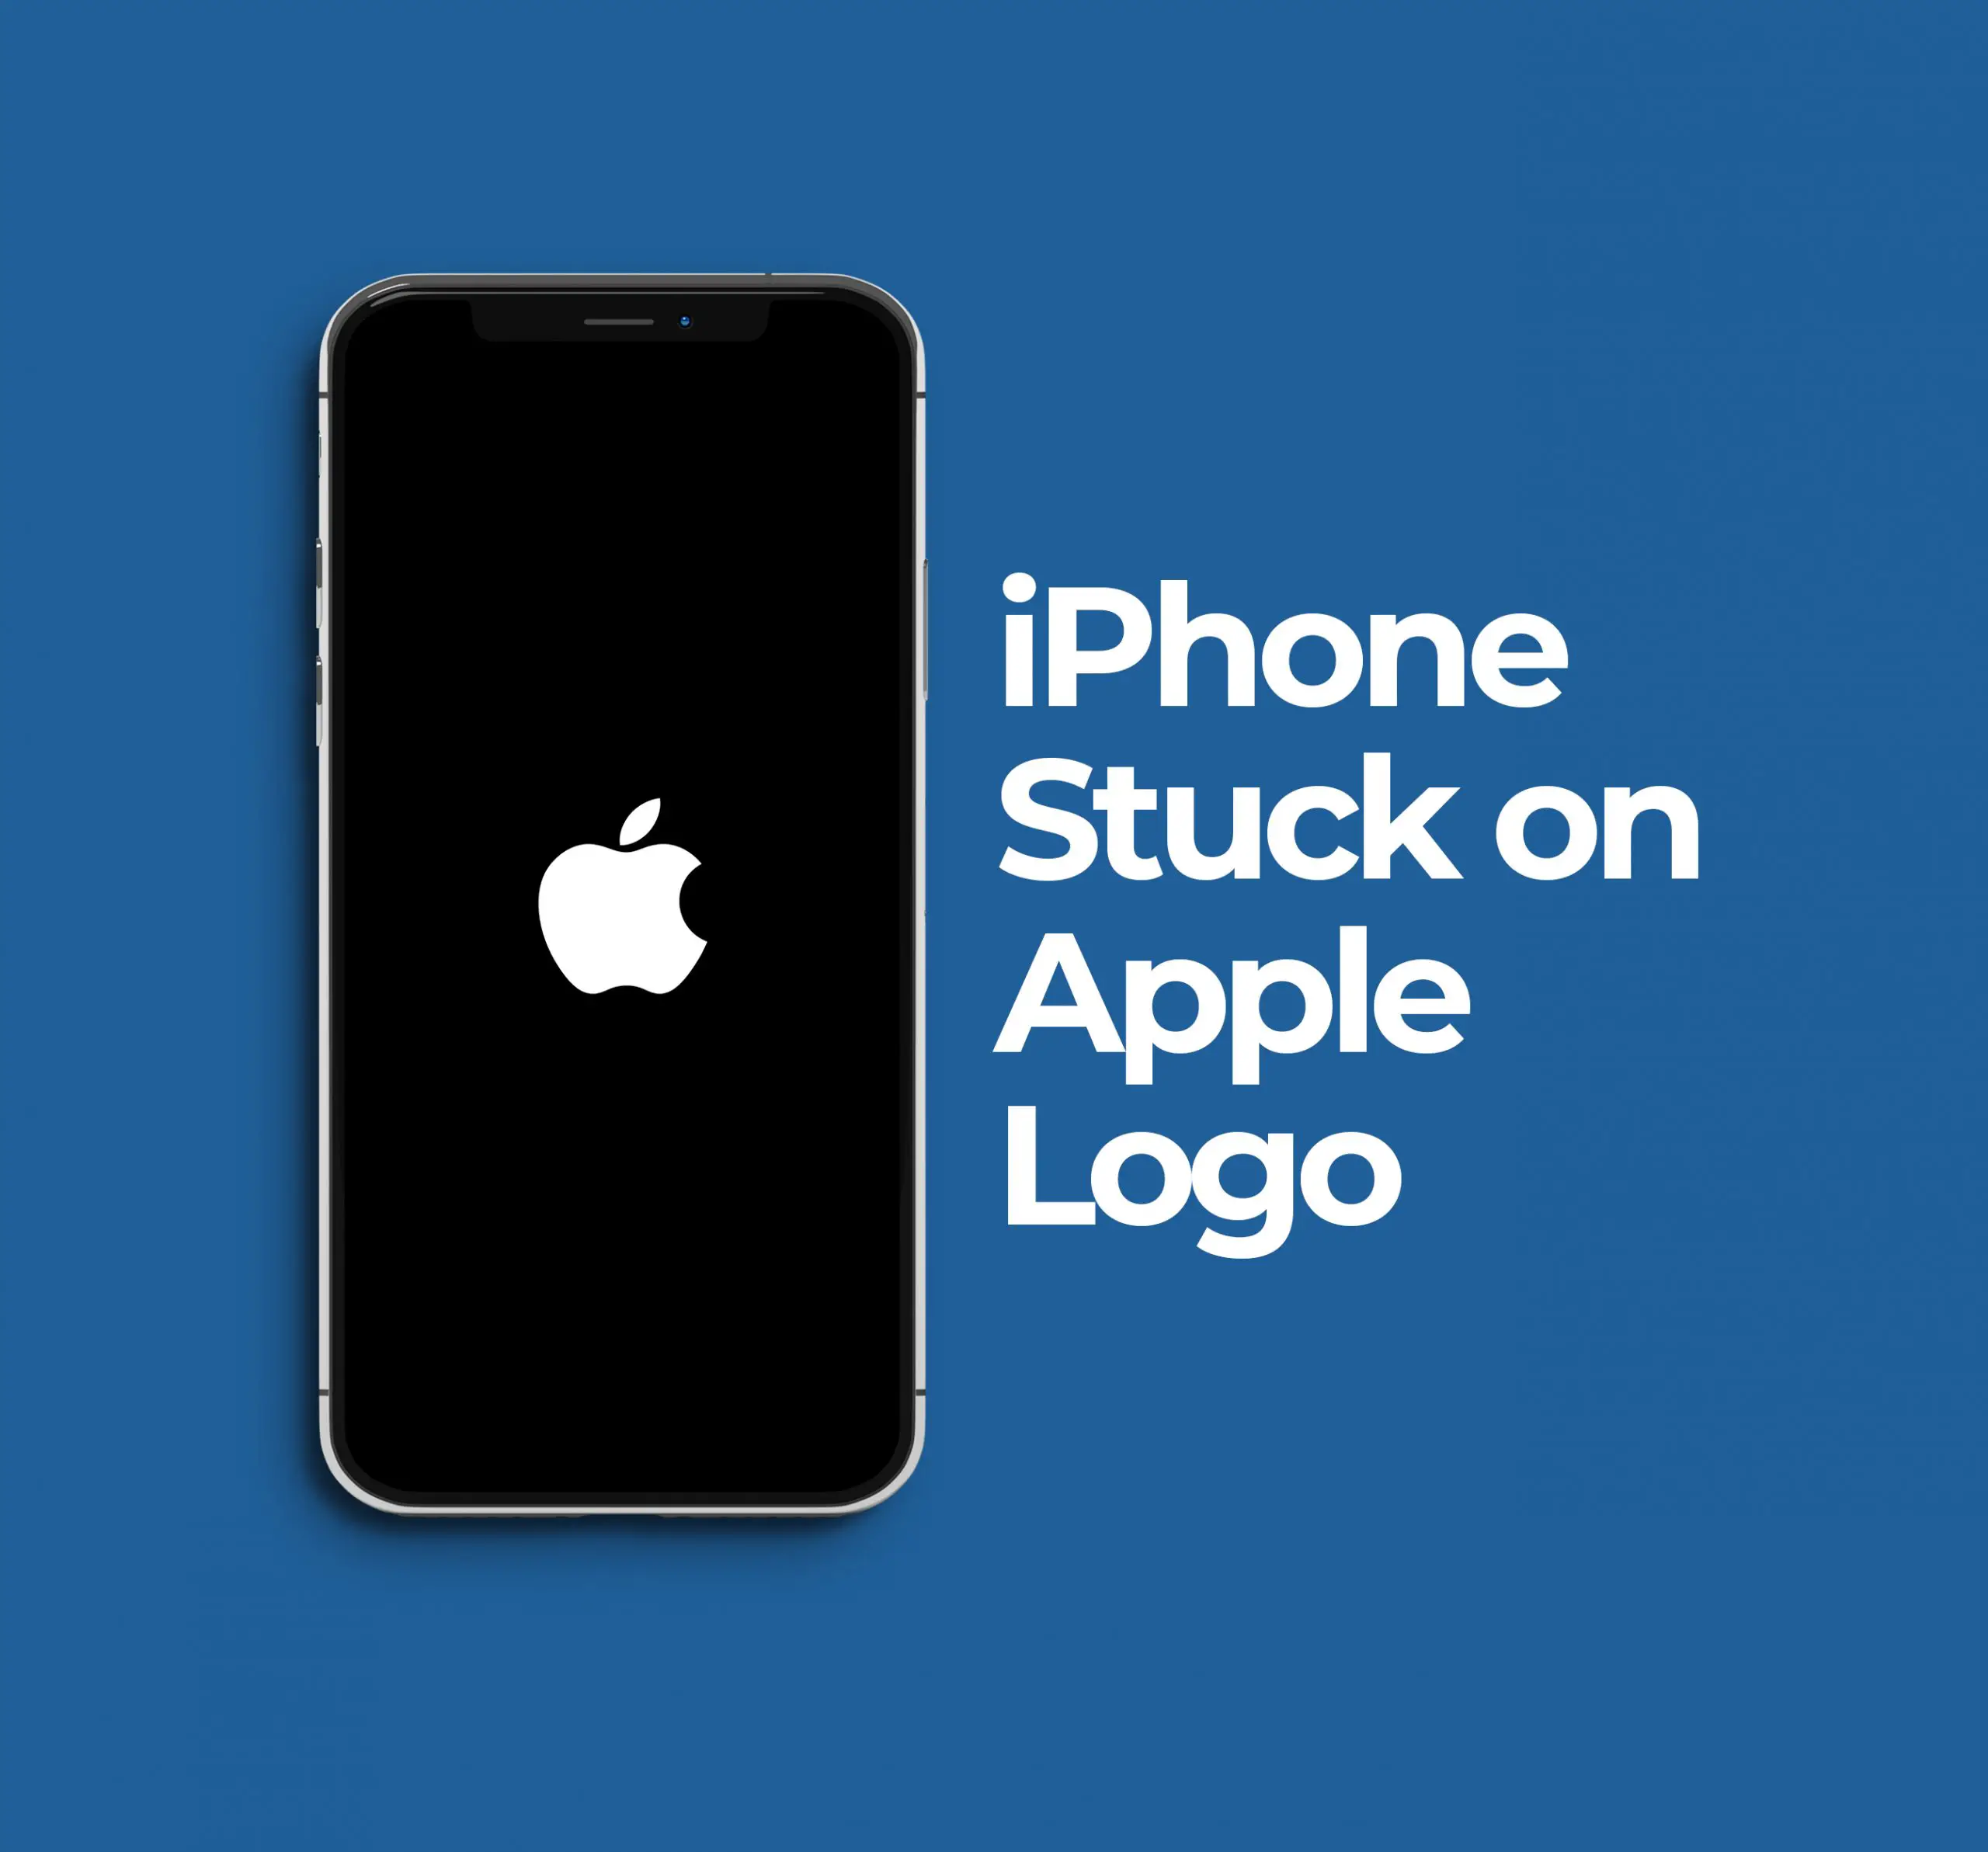 2. iPhone Stuck on Apple Logo